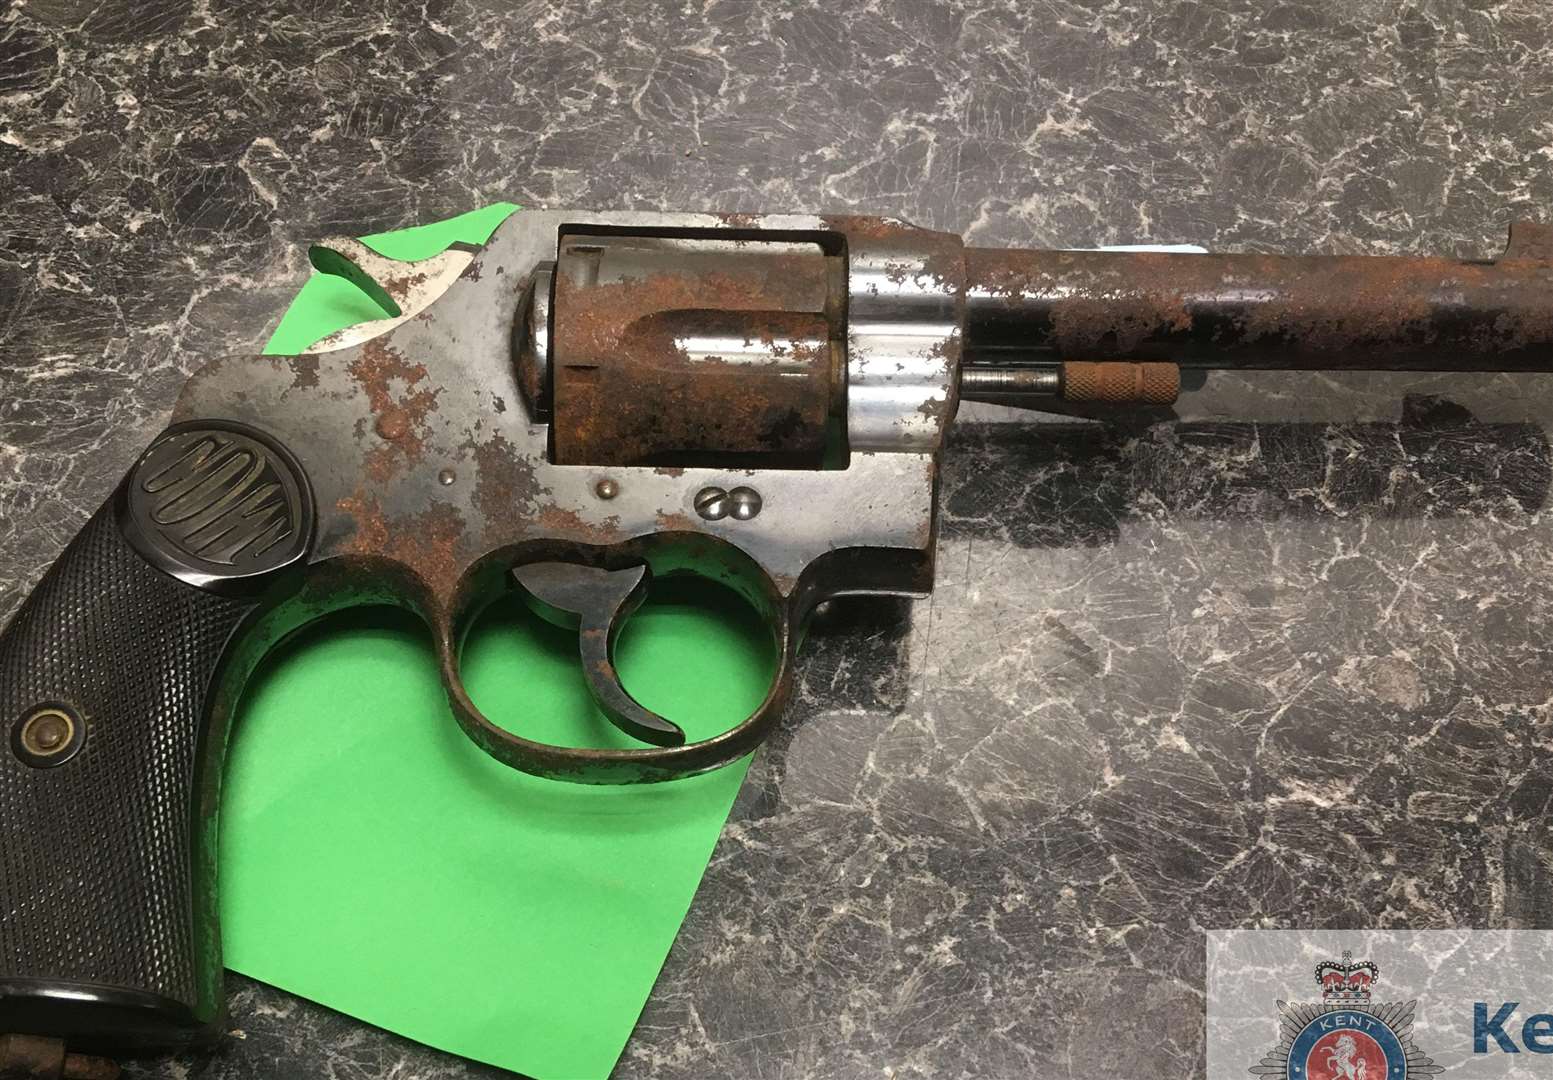 A Colt.445 calibre revolver handed into police